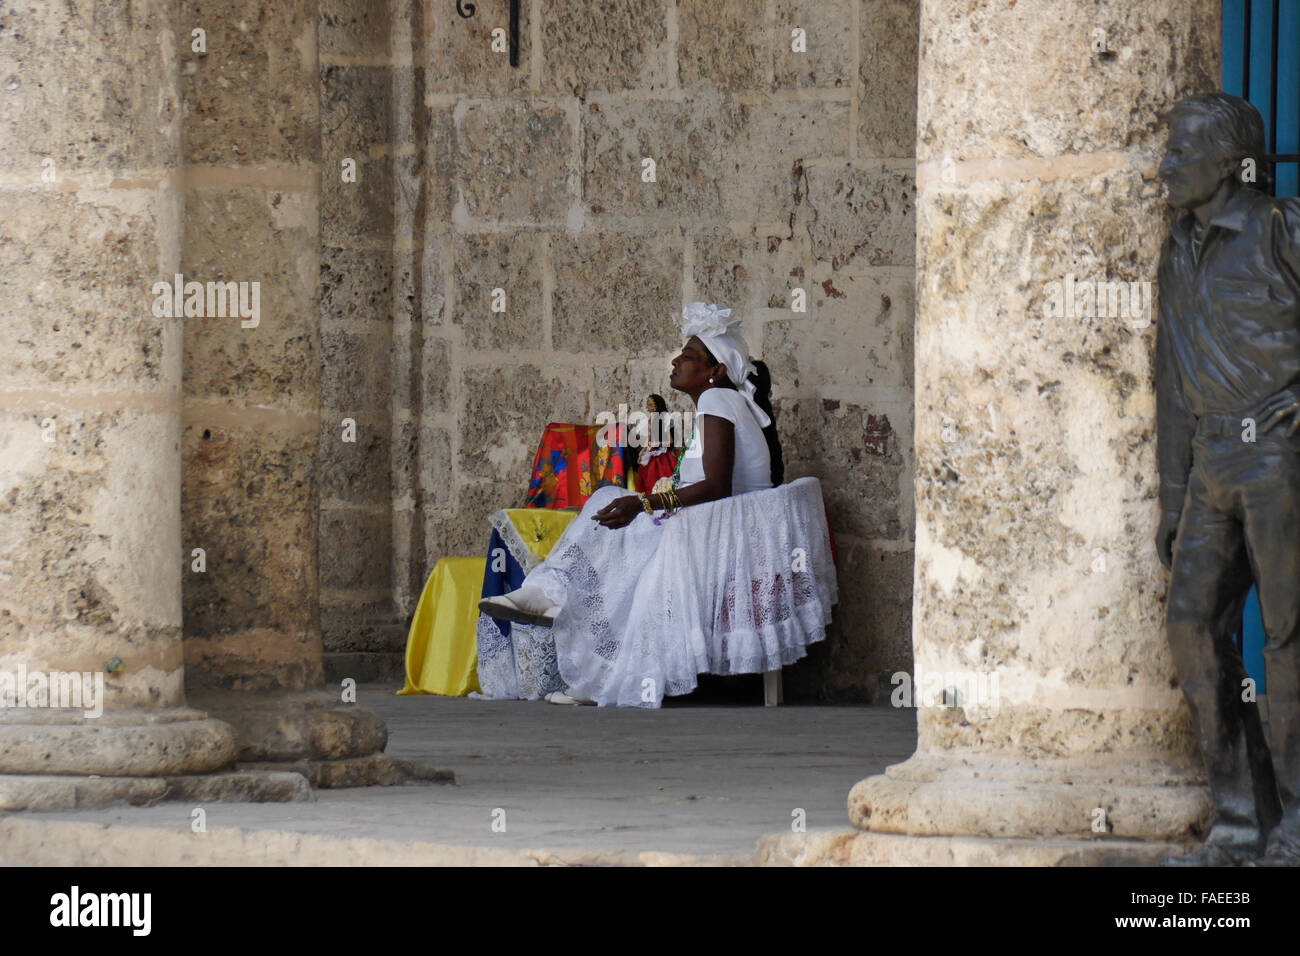 Fortune teller awaiting customers, Plaza de la Catedral, Habana Vieja (Old Havana), Cuba Stock Photo